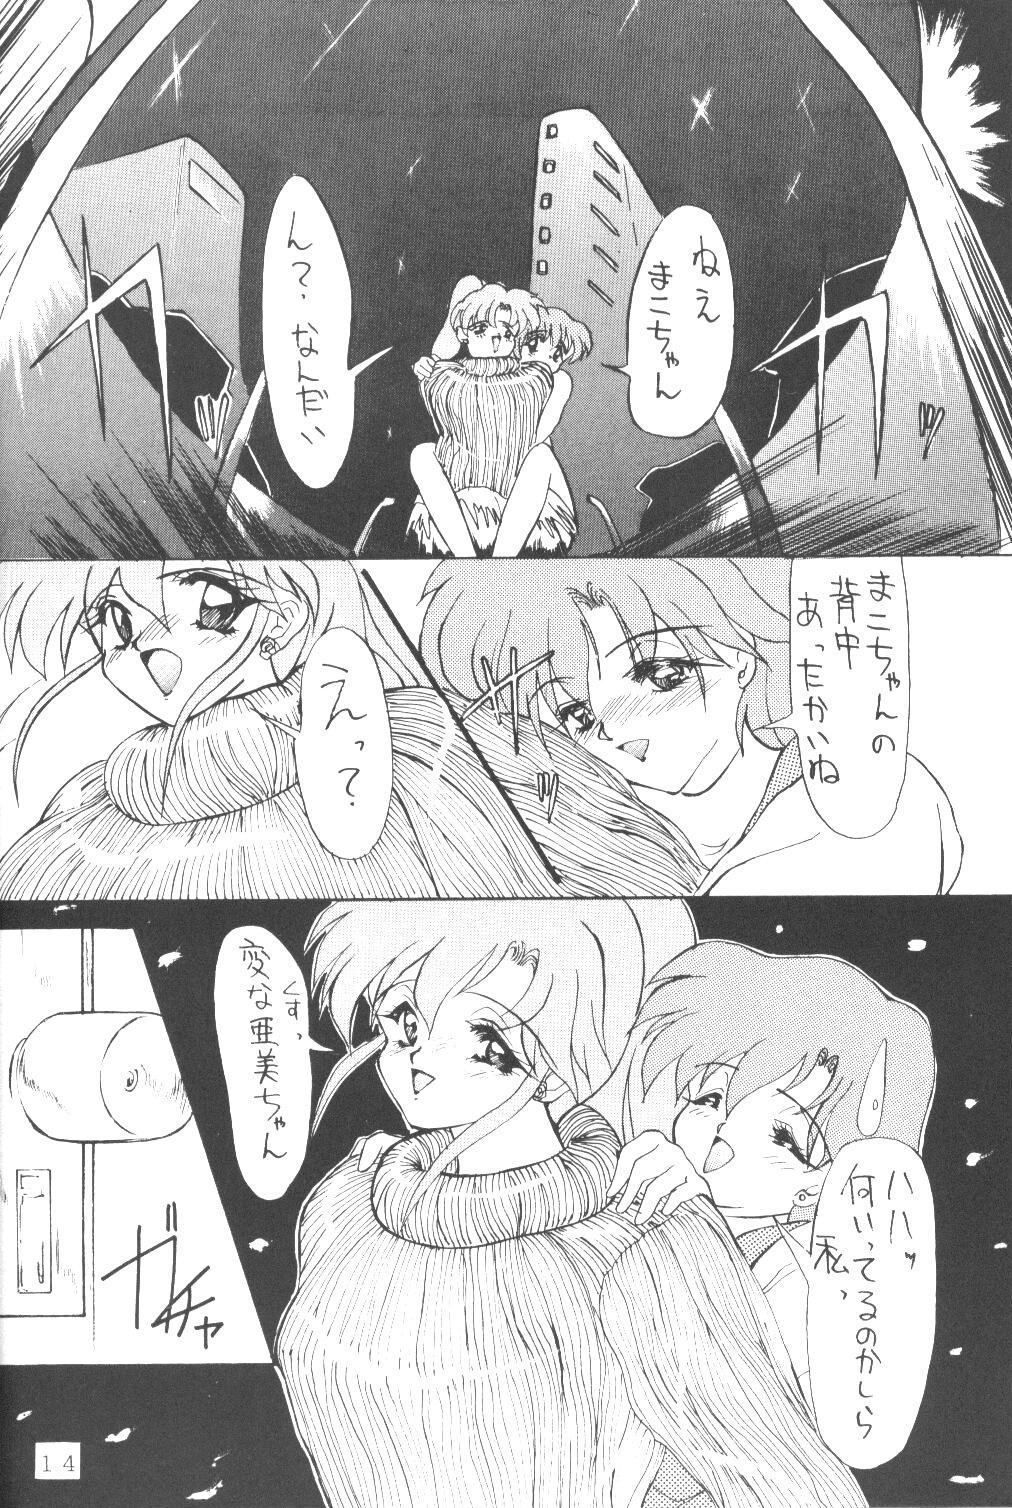 Ex Girlfriend ALIVE AMI LOST - Sailor moon Male - Page 13